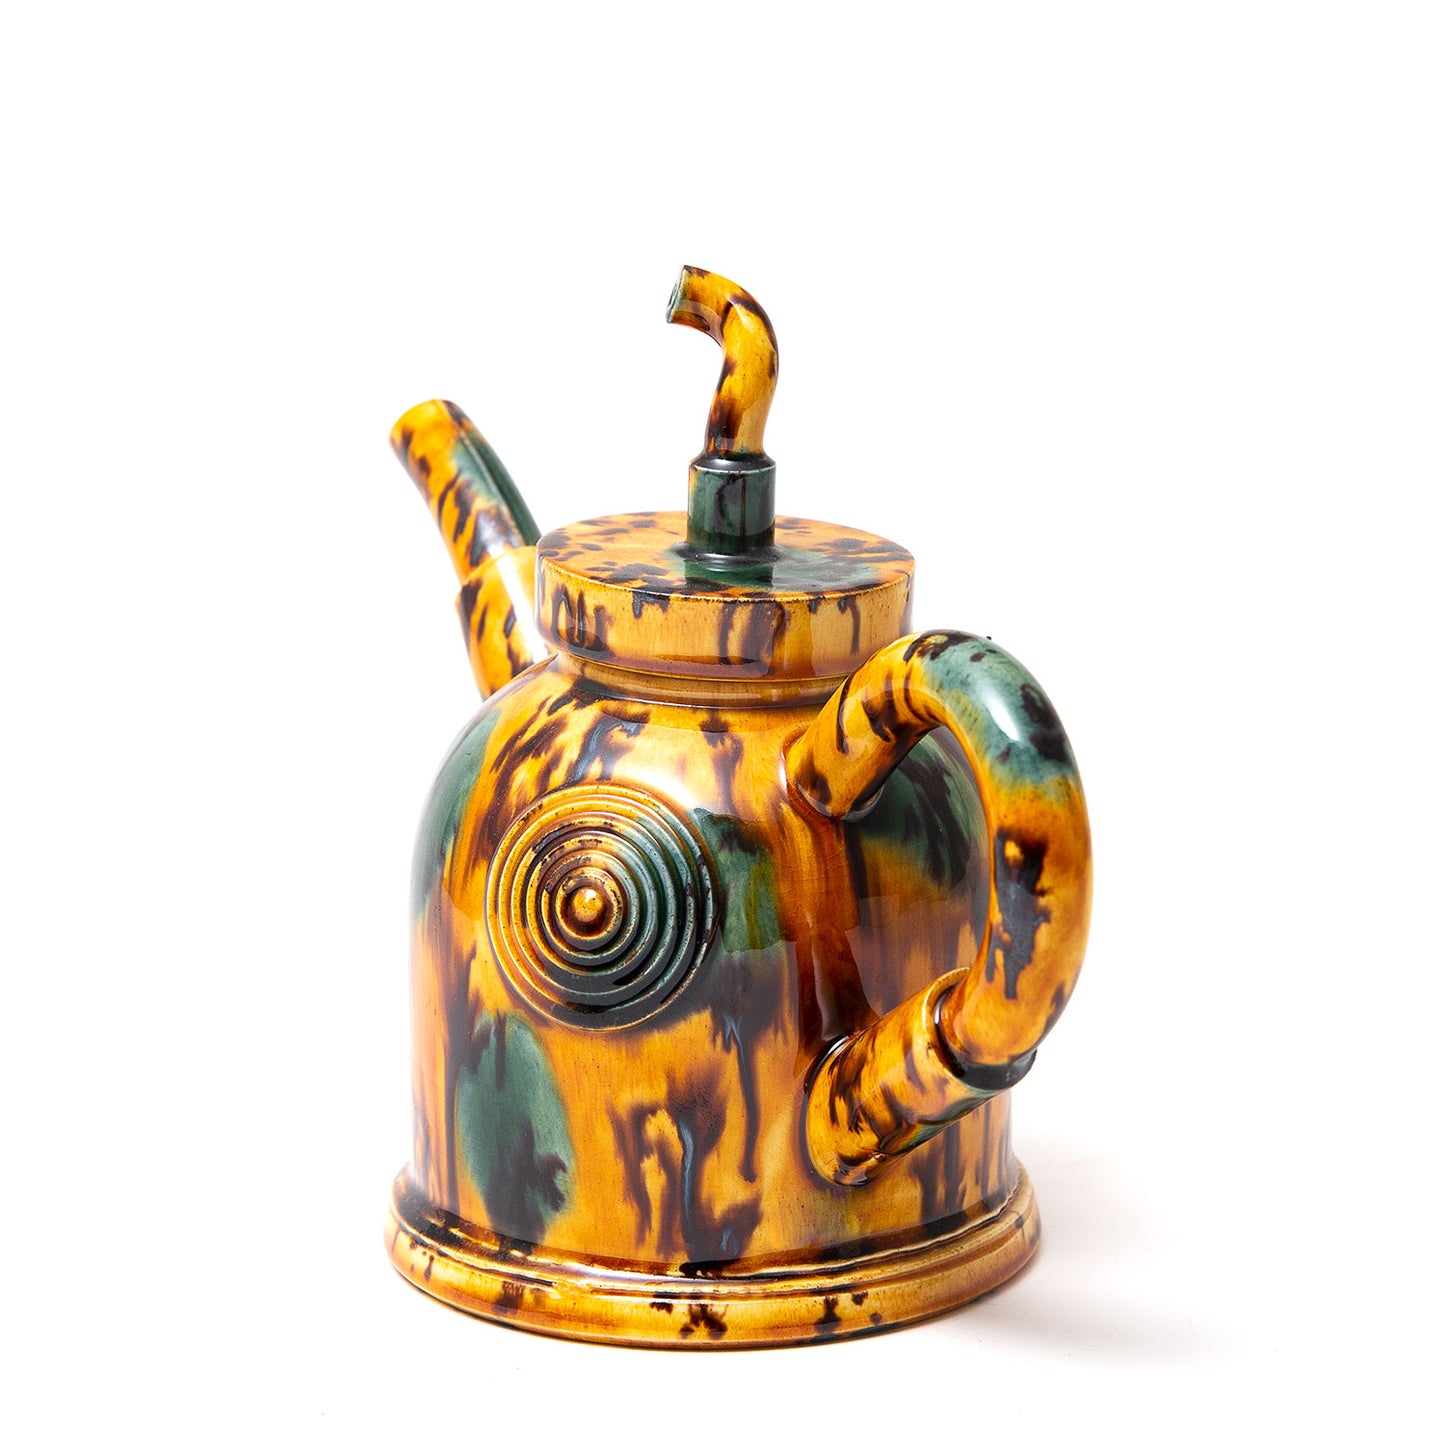 Teapot with Telescope Spout